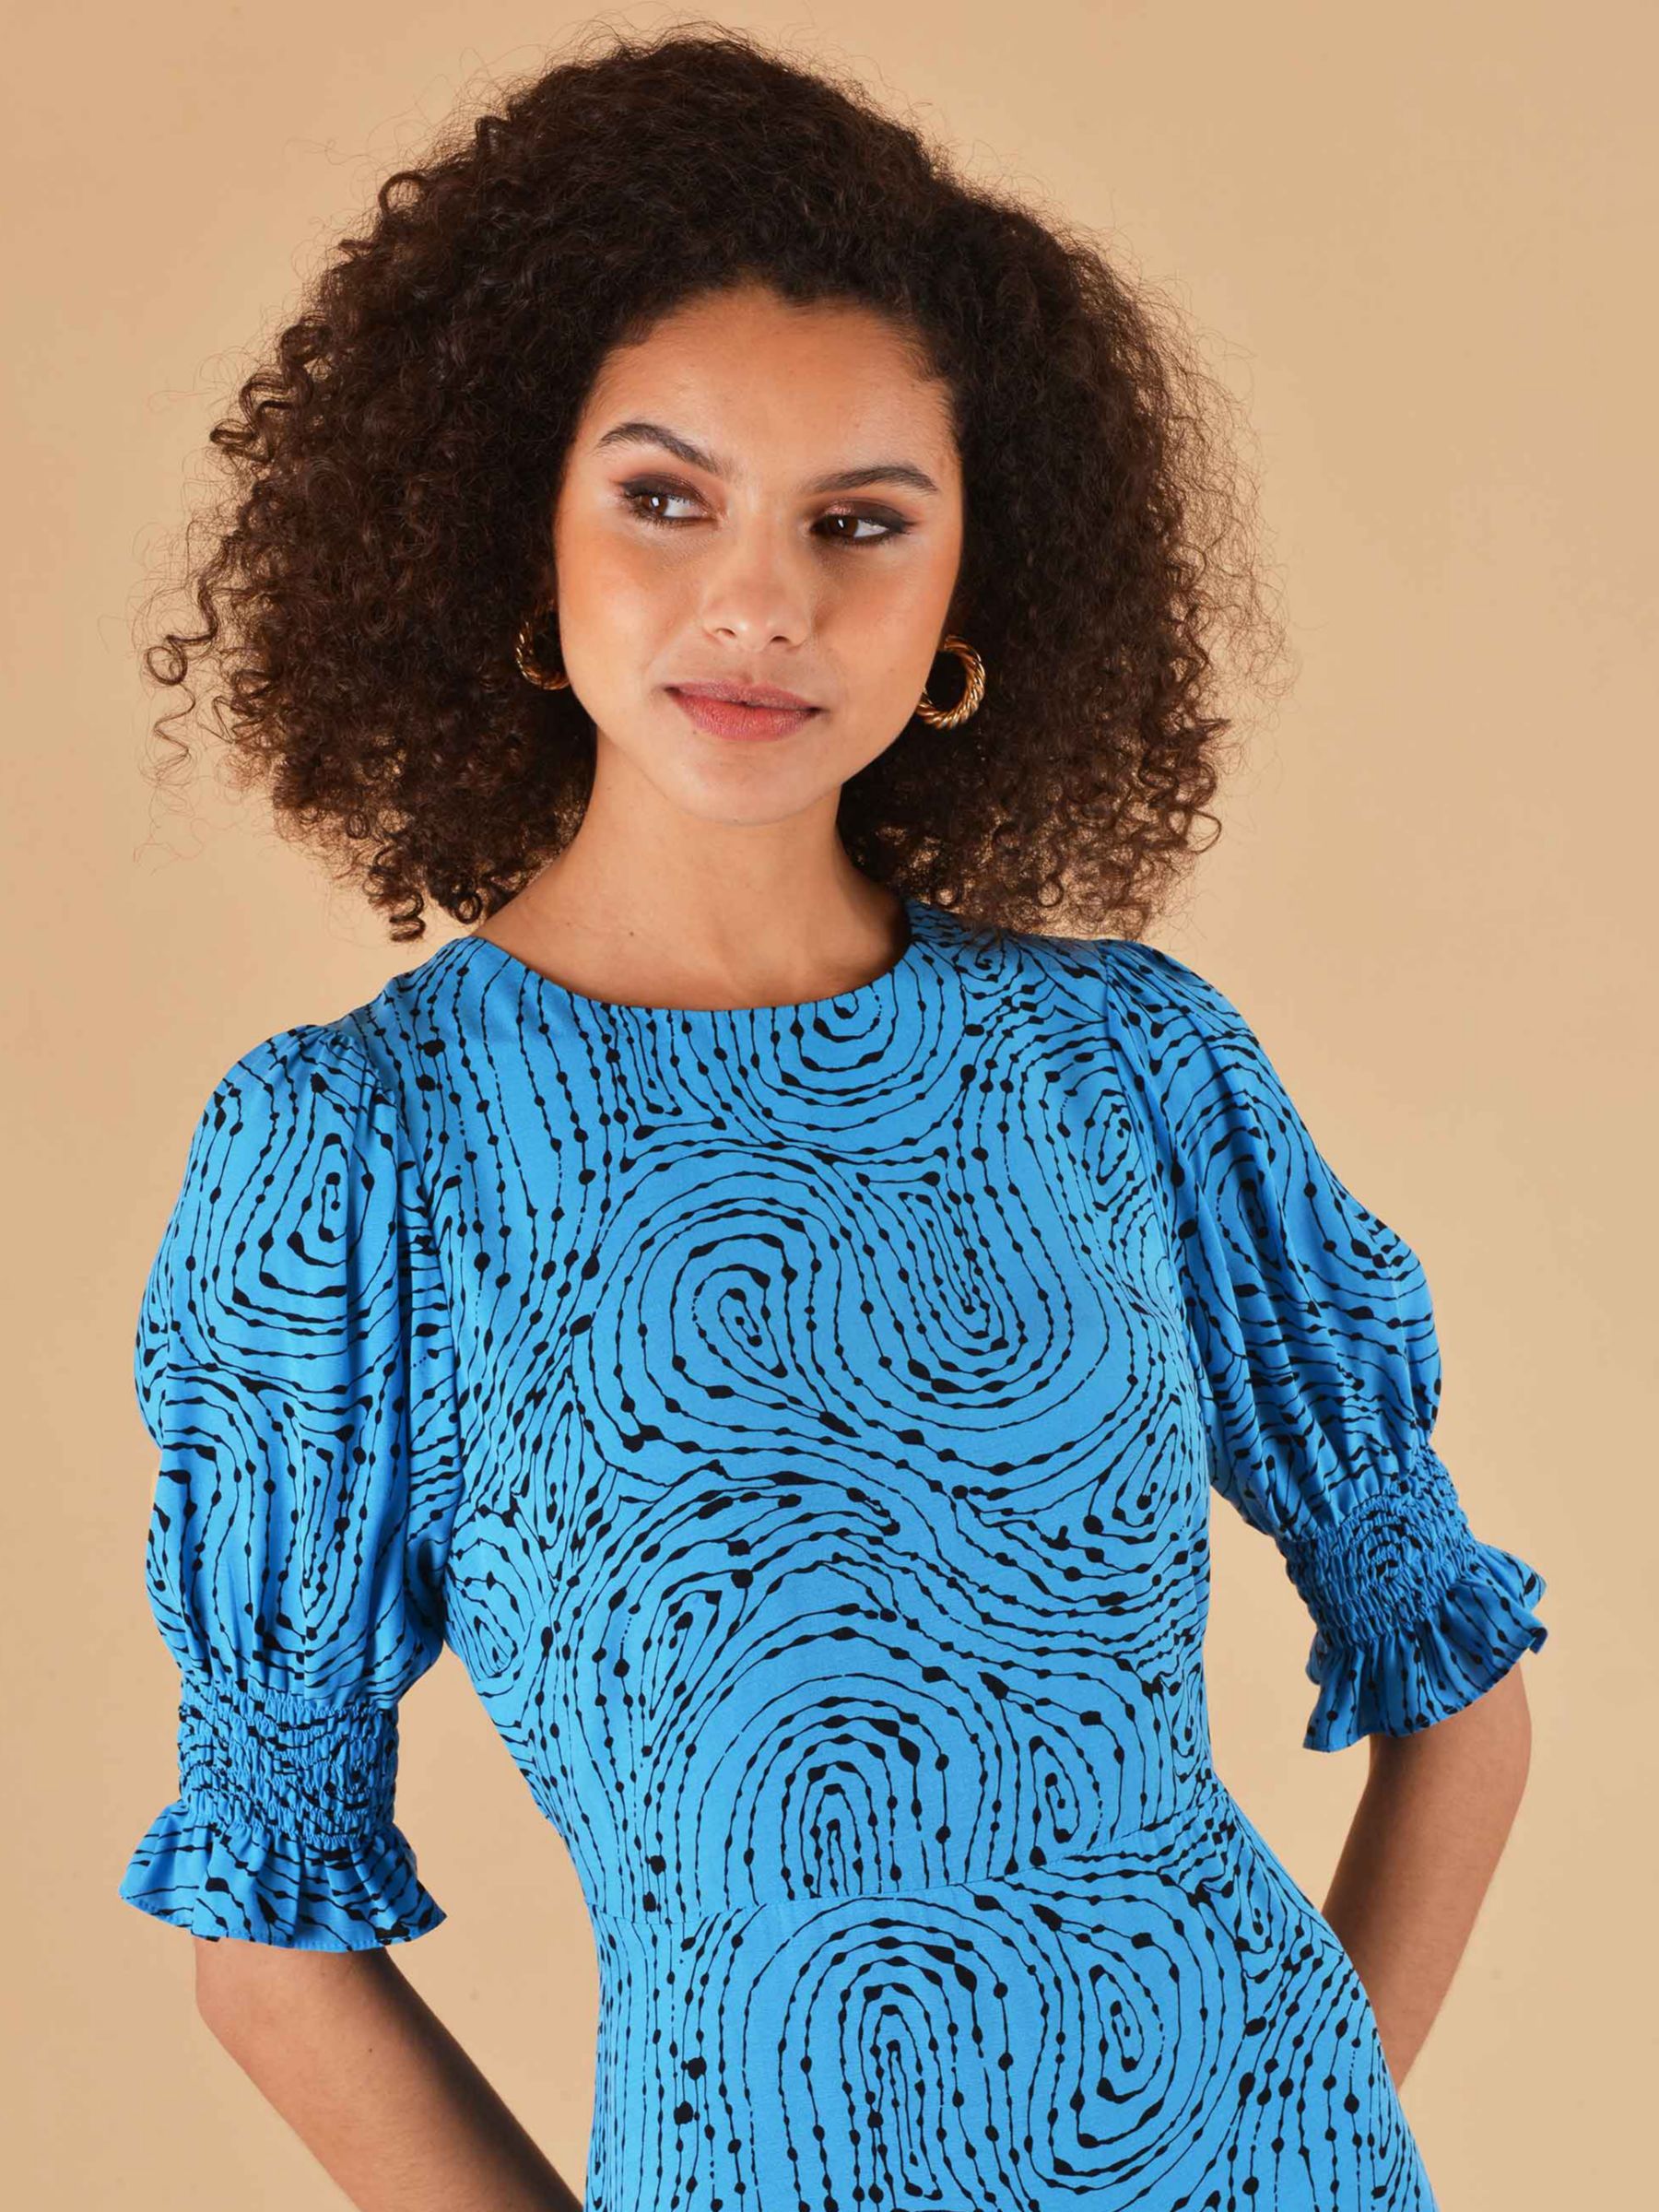 Ro&Zo Swirl Print Midi Sheath Dress, Blue/Multi, 8